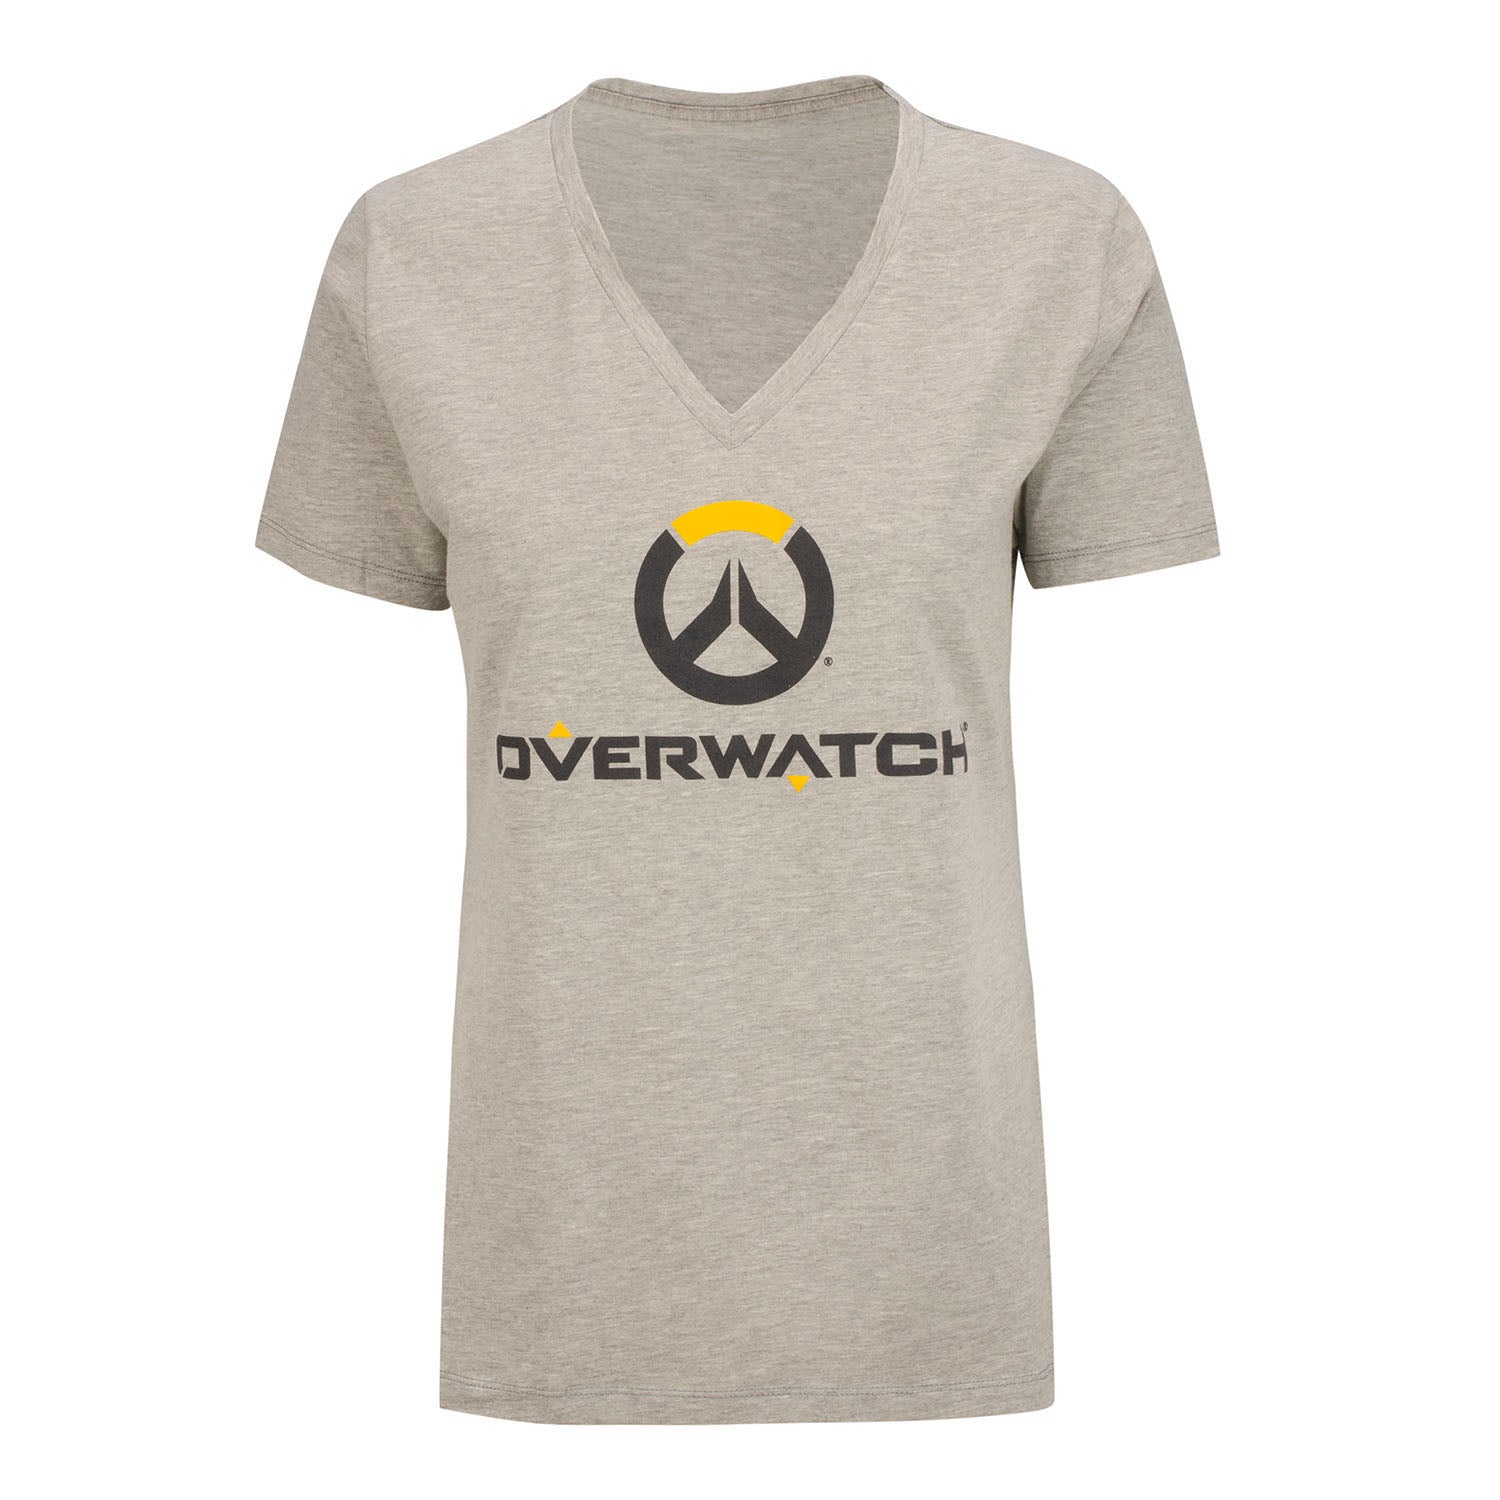 Overwatch Women's Grey Logo V-Neck T-Shirt - Front View